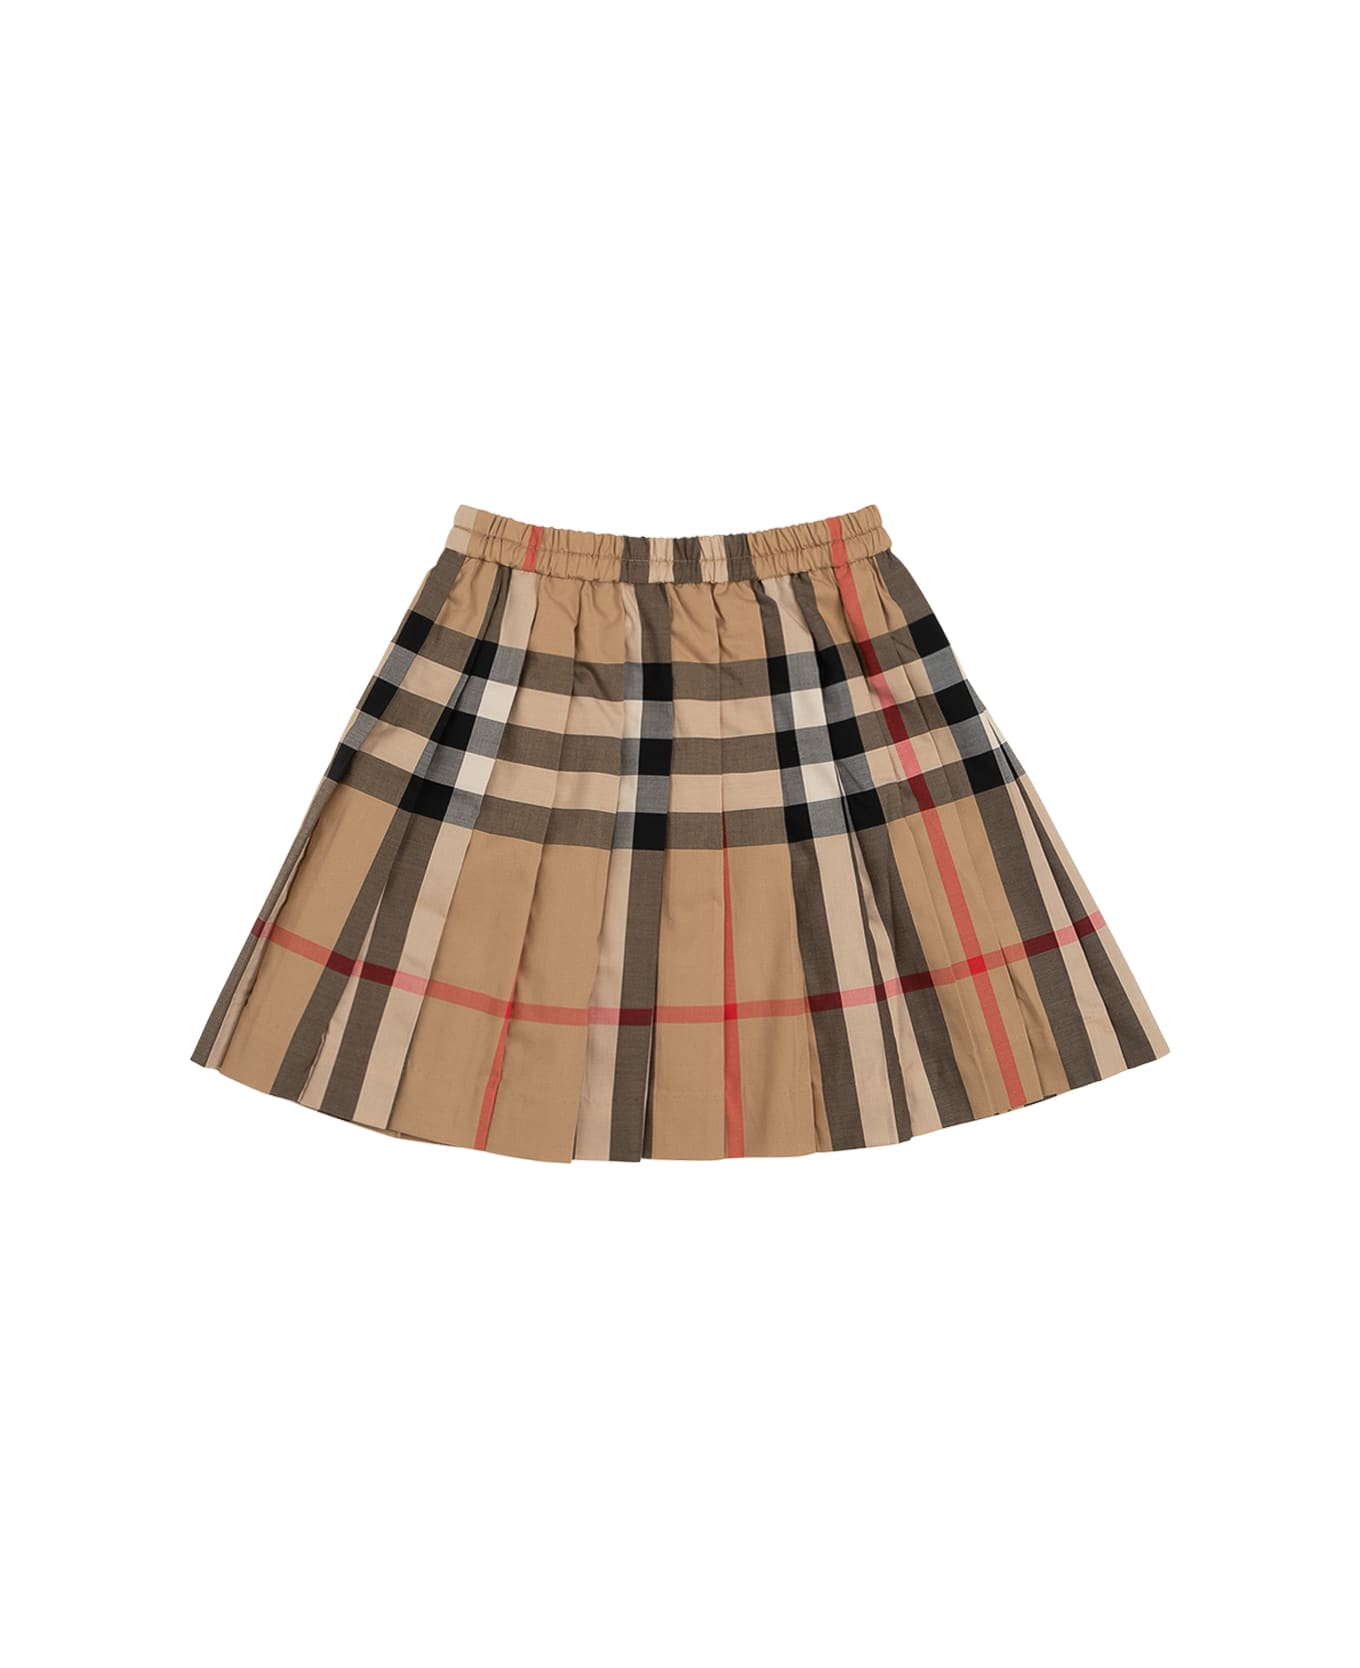 Burberry Vintage Check Cotton Skirt